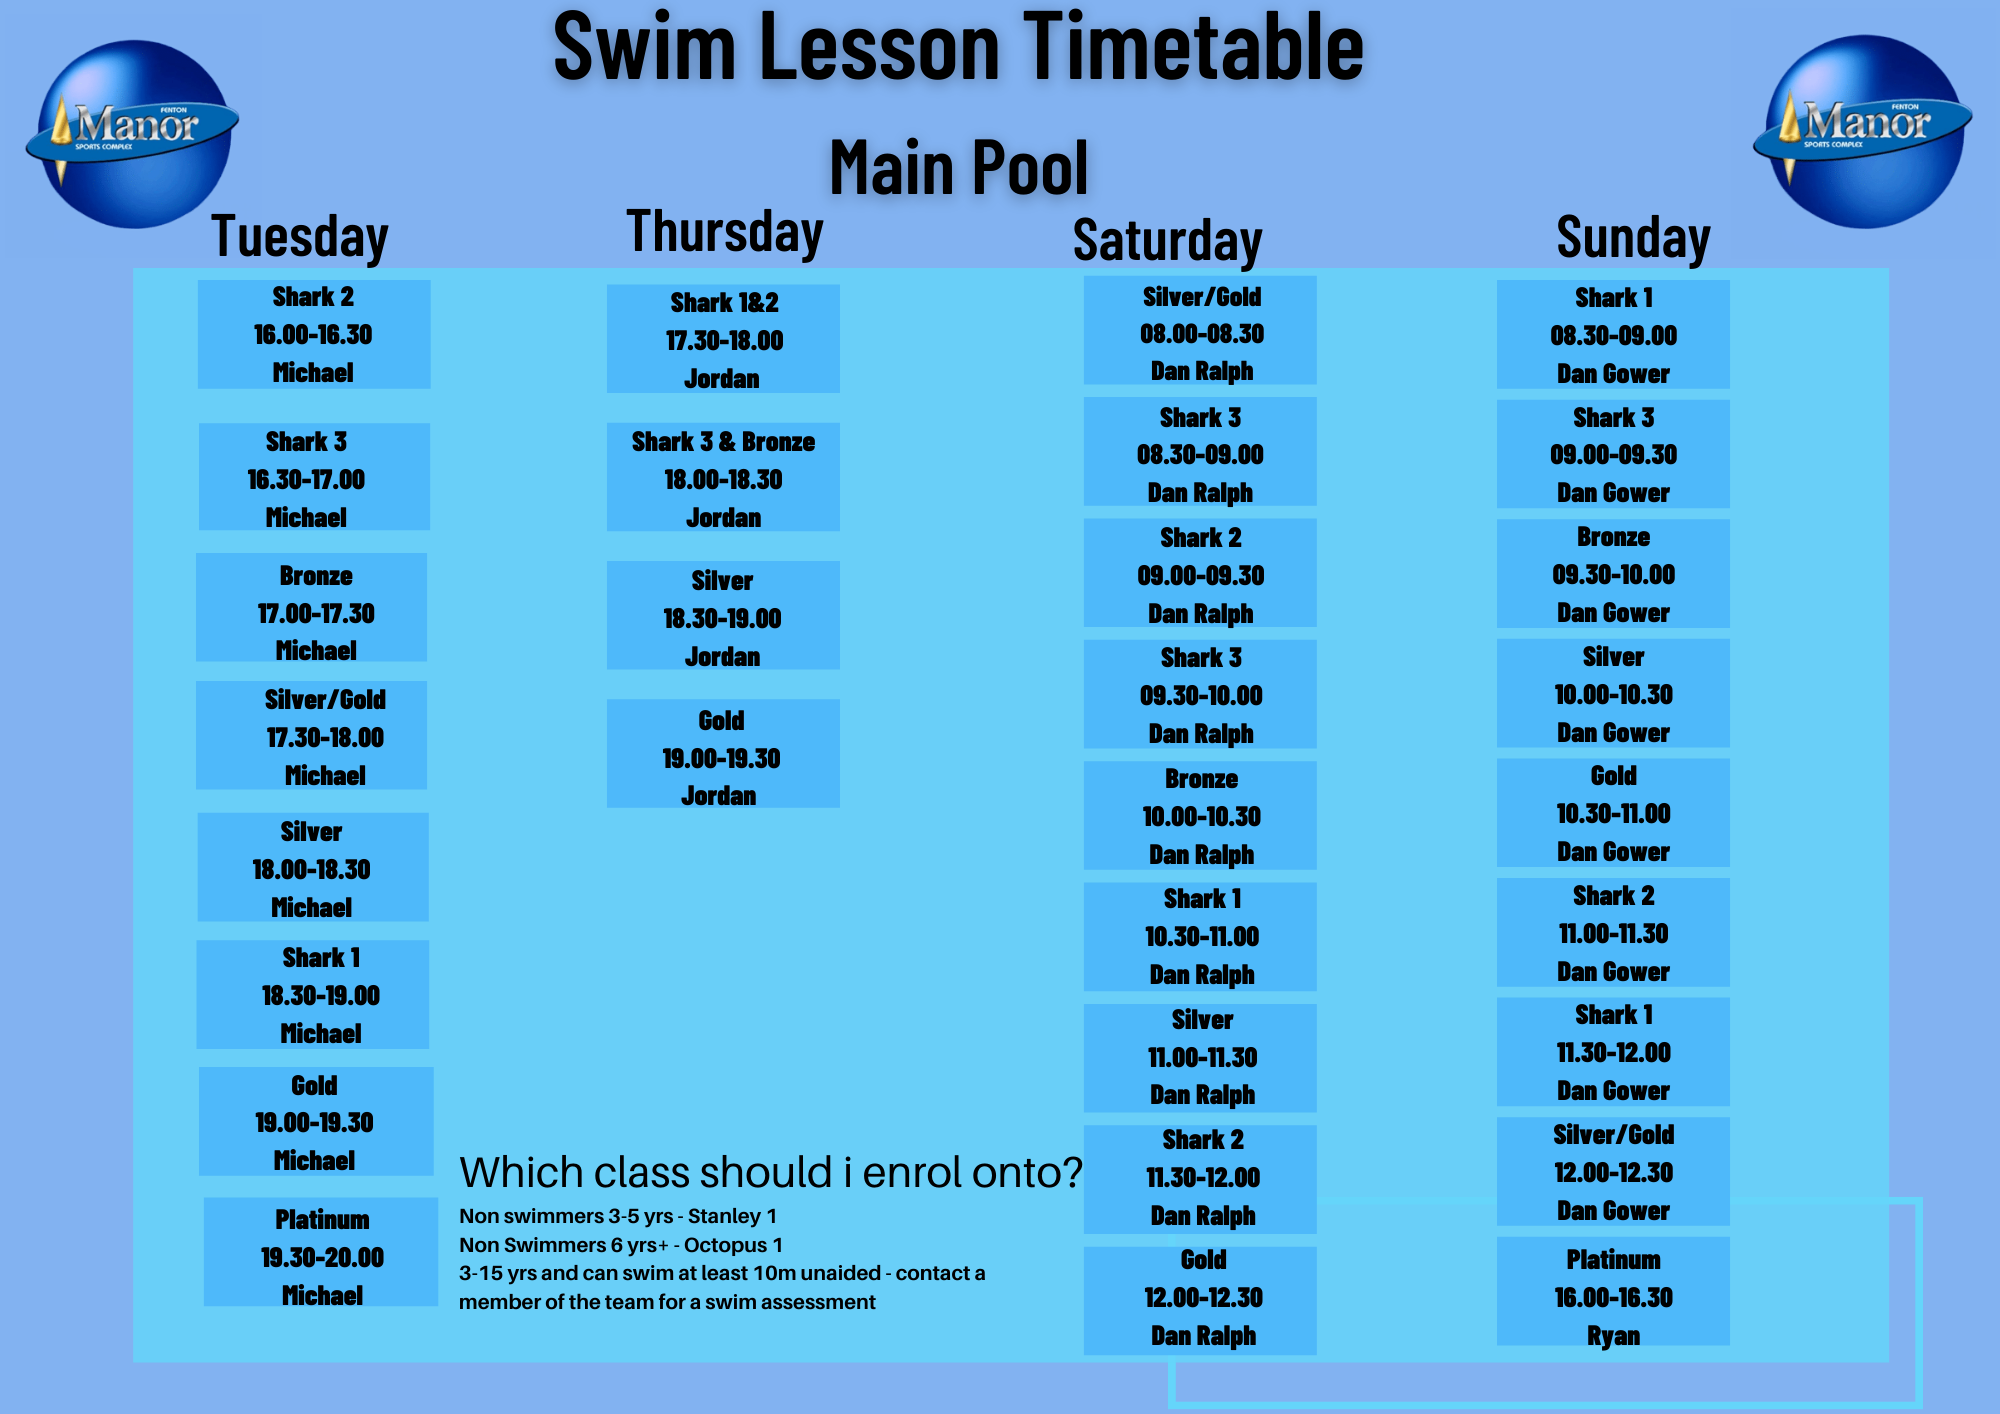 Swim times